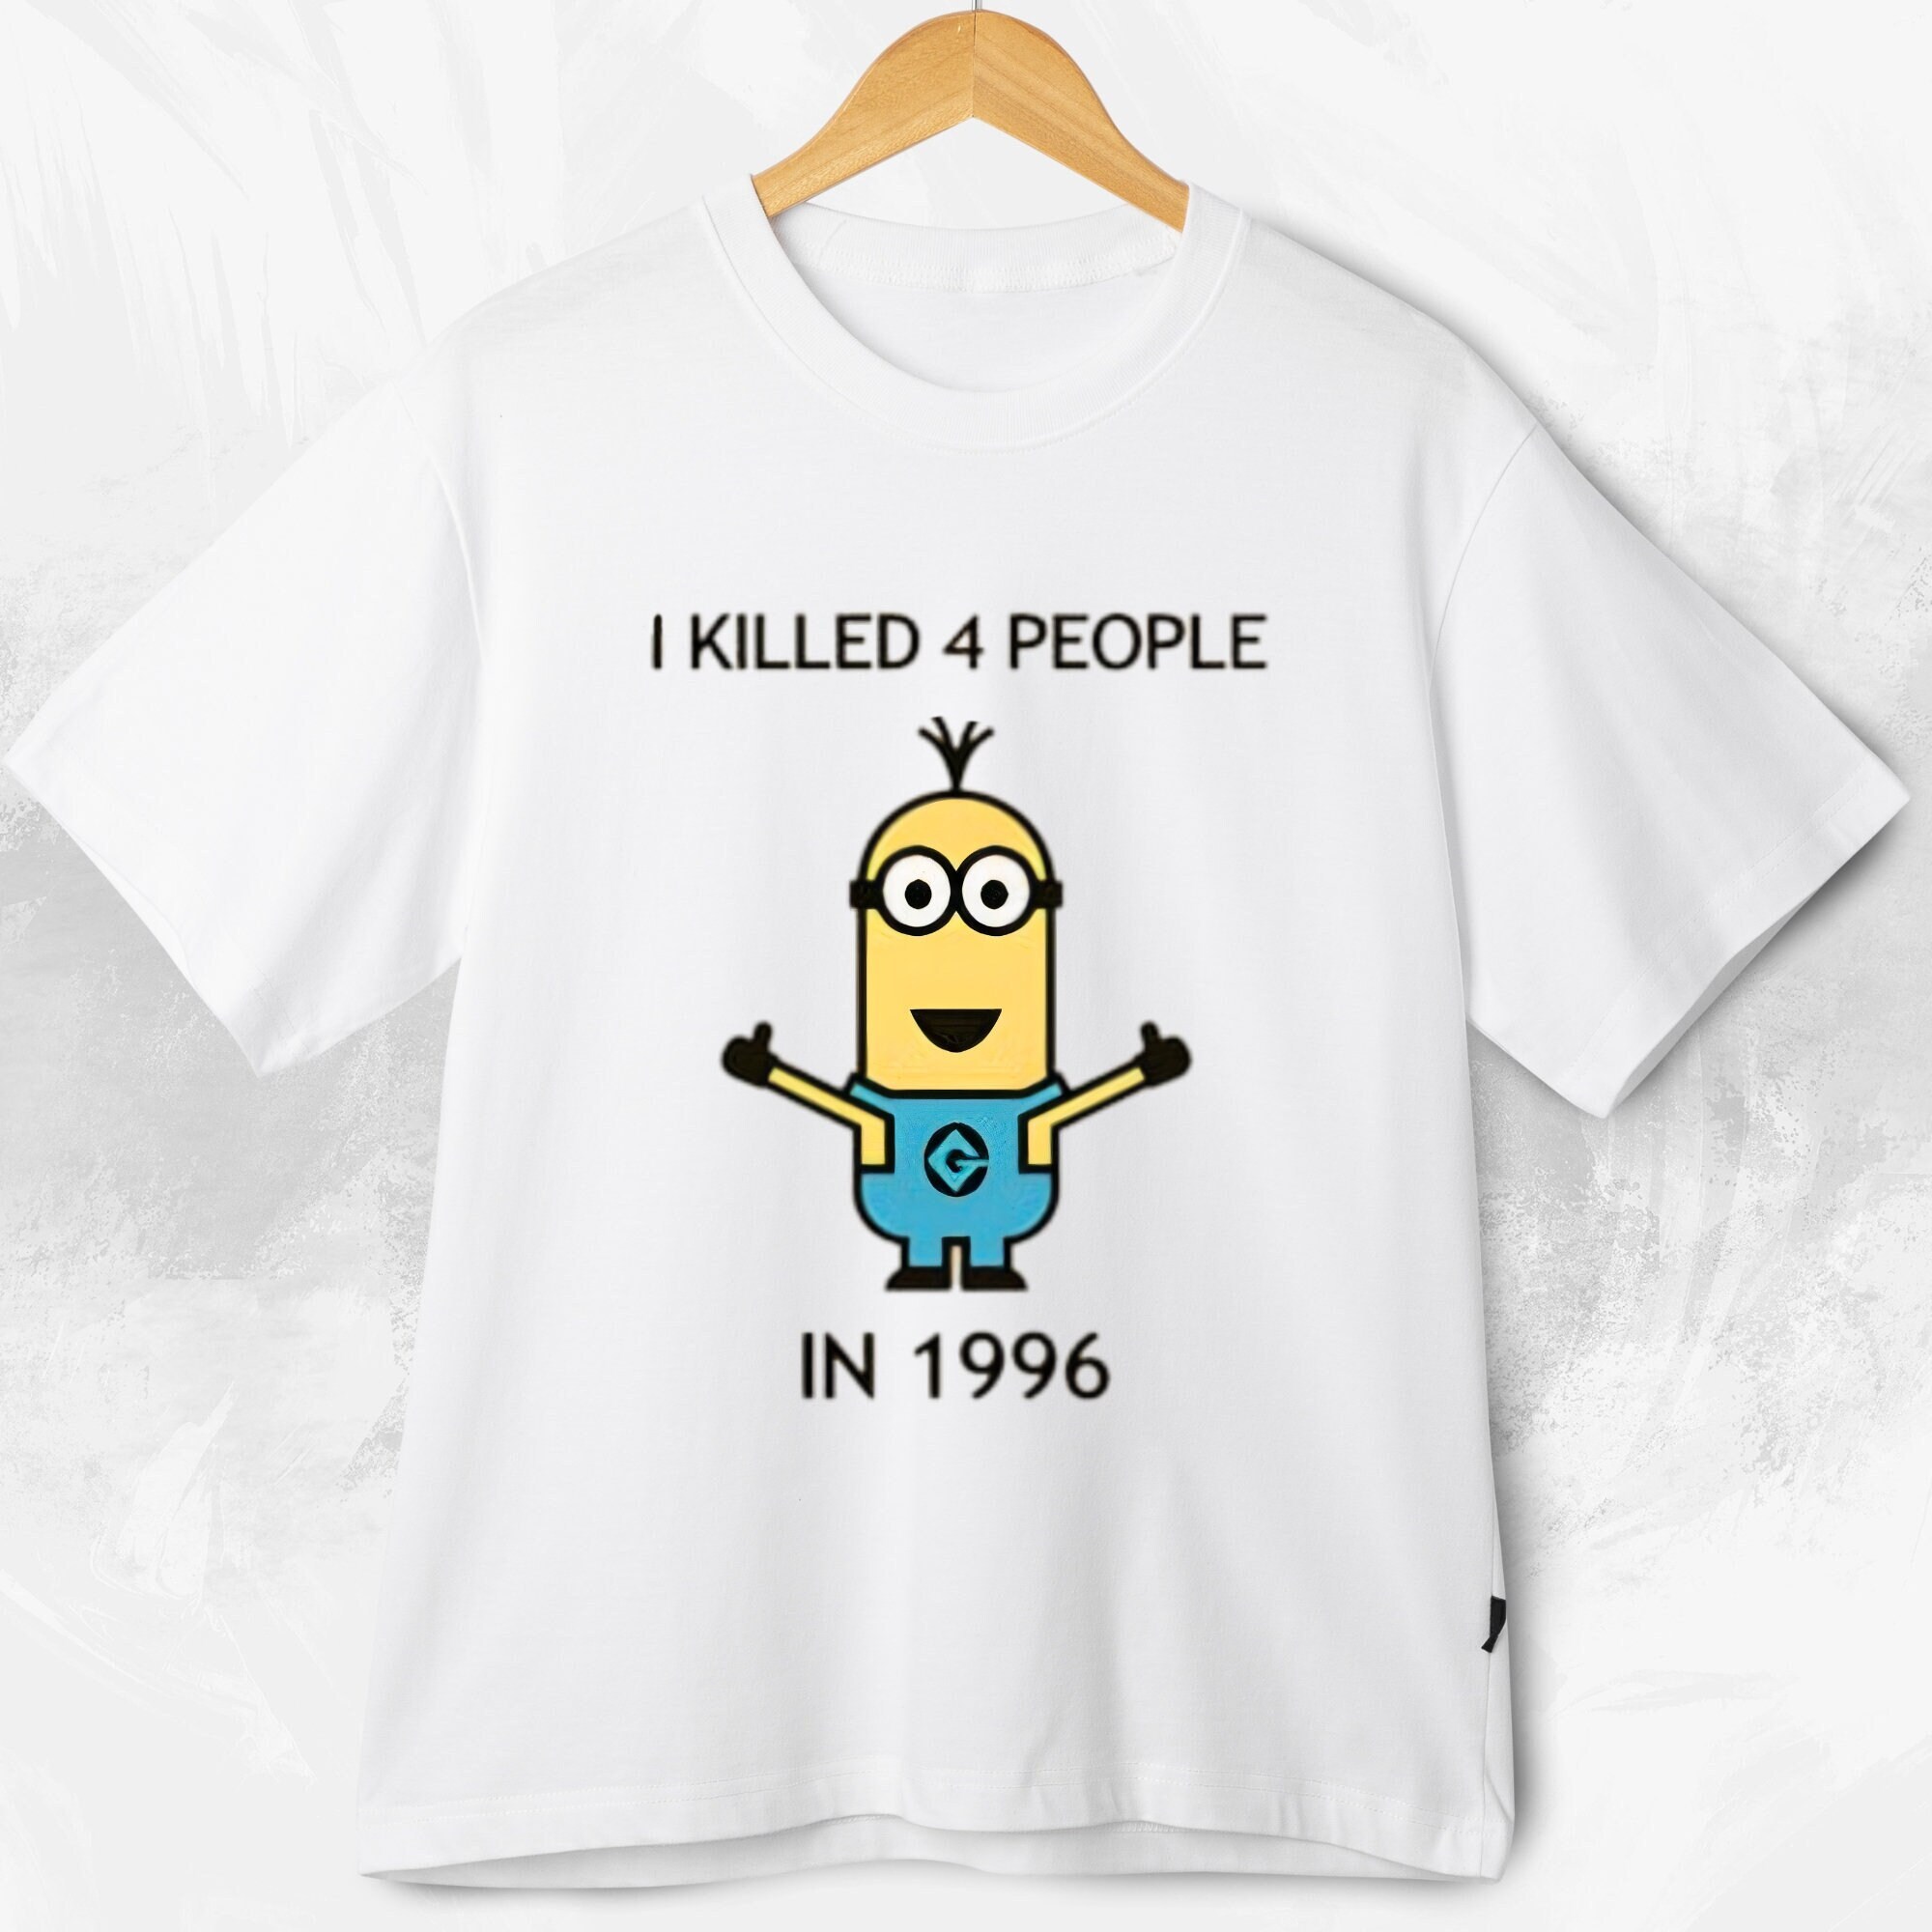 Cursed Image: Gru - Meme - T-Shirt